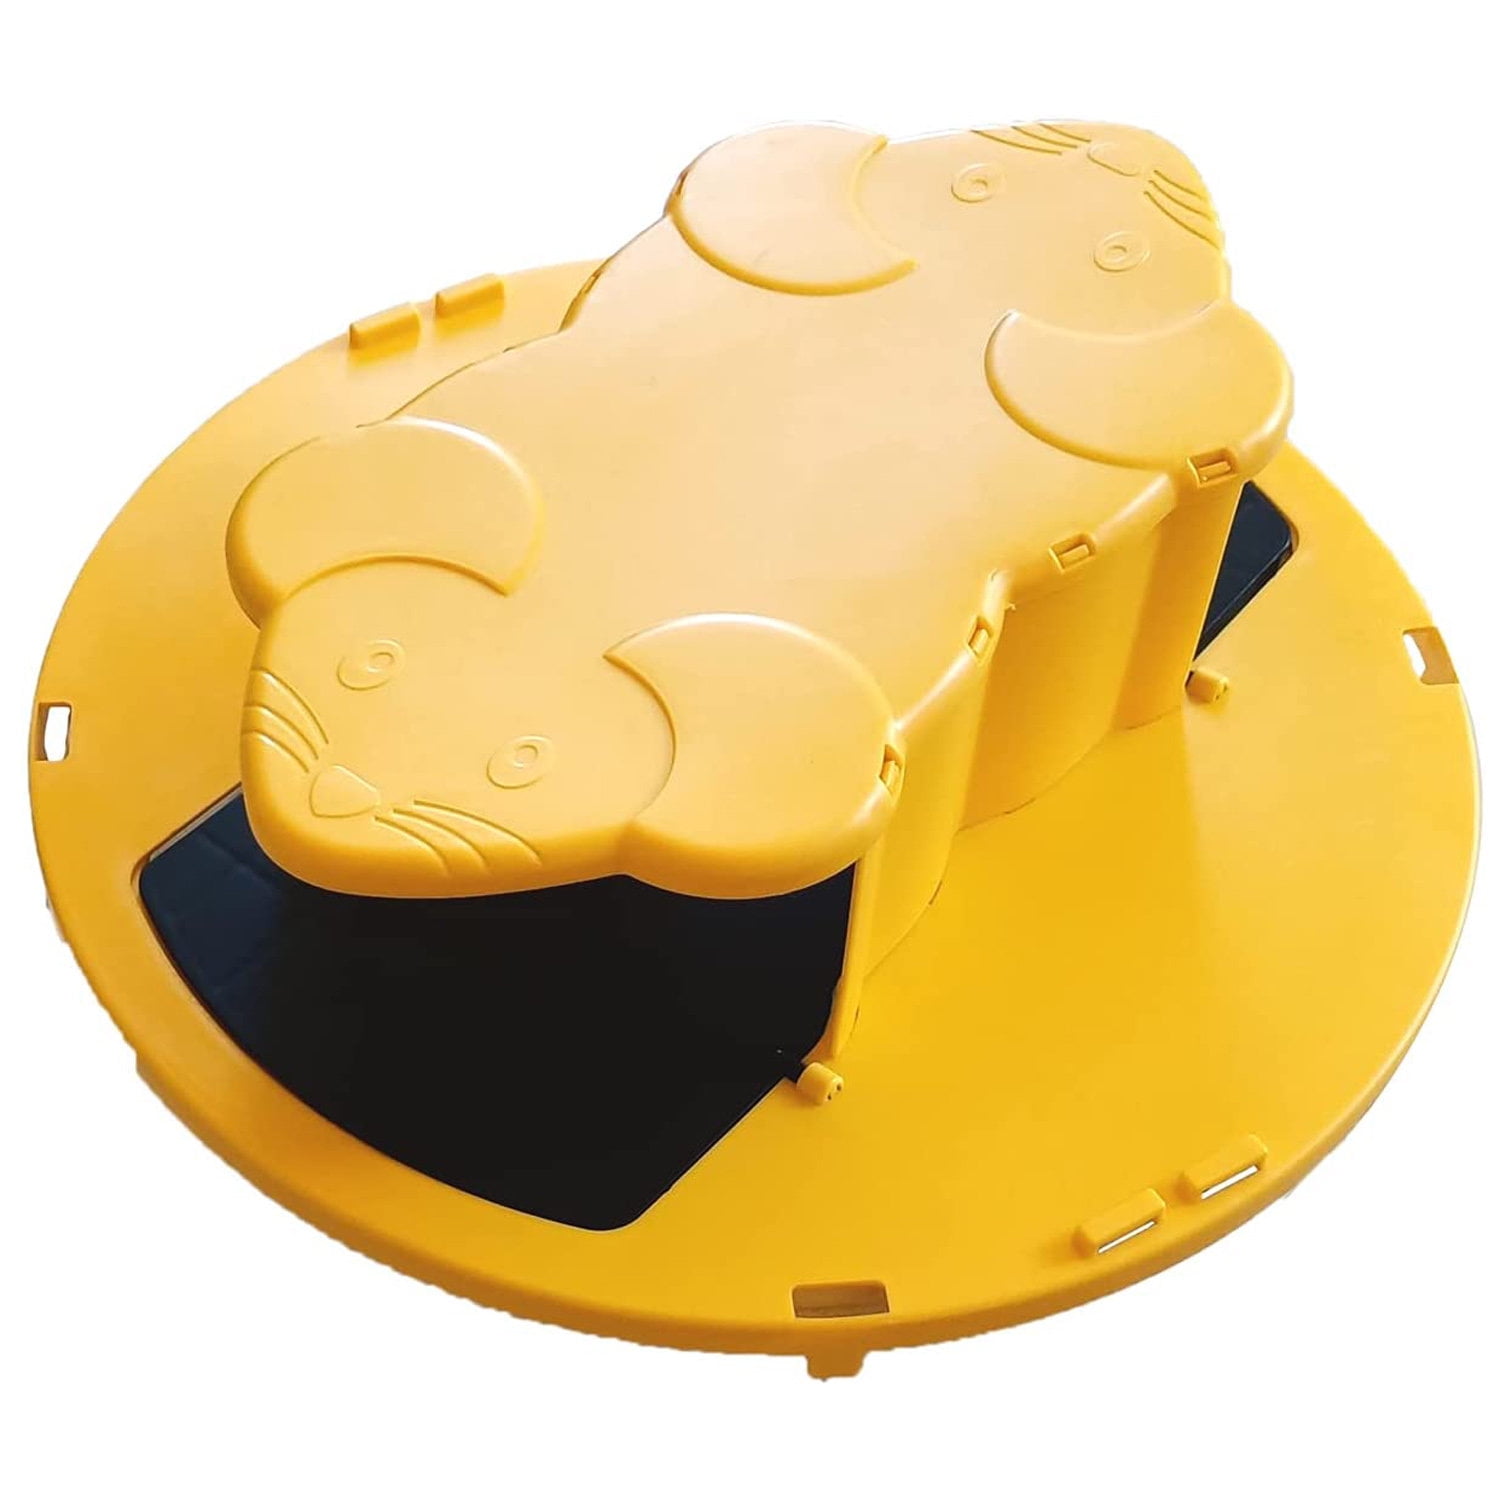 Slide Bucket Lid Mouse Rat Trap With Ramp, Flip Auto Reset Multi Catch For  Indoor Outdoor, Compatible 5 Gallon Bucket, (barrel Not Included),  Diameter, Ladder . - Temu